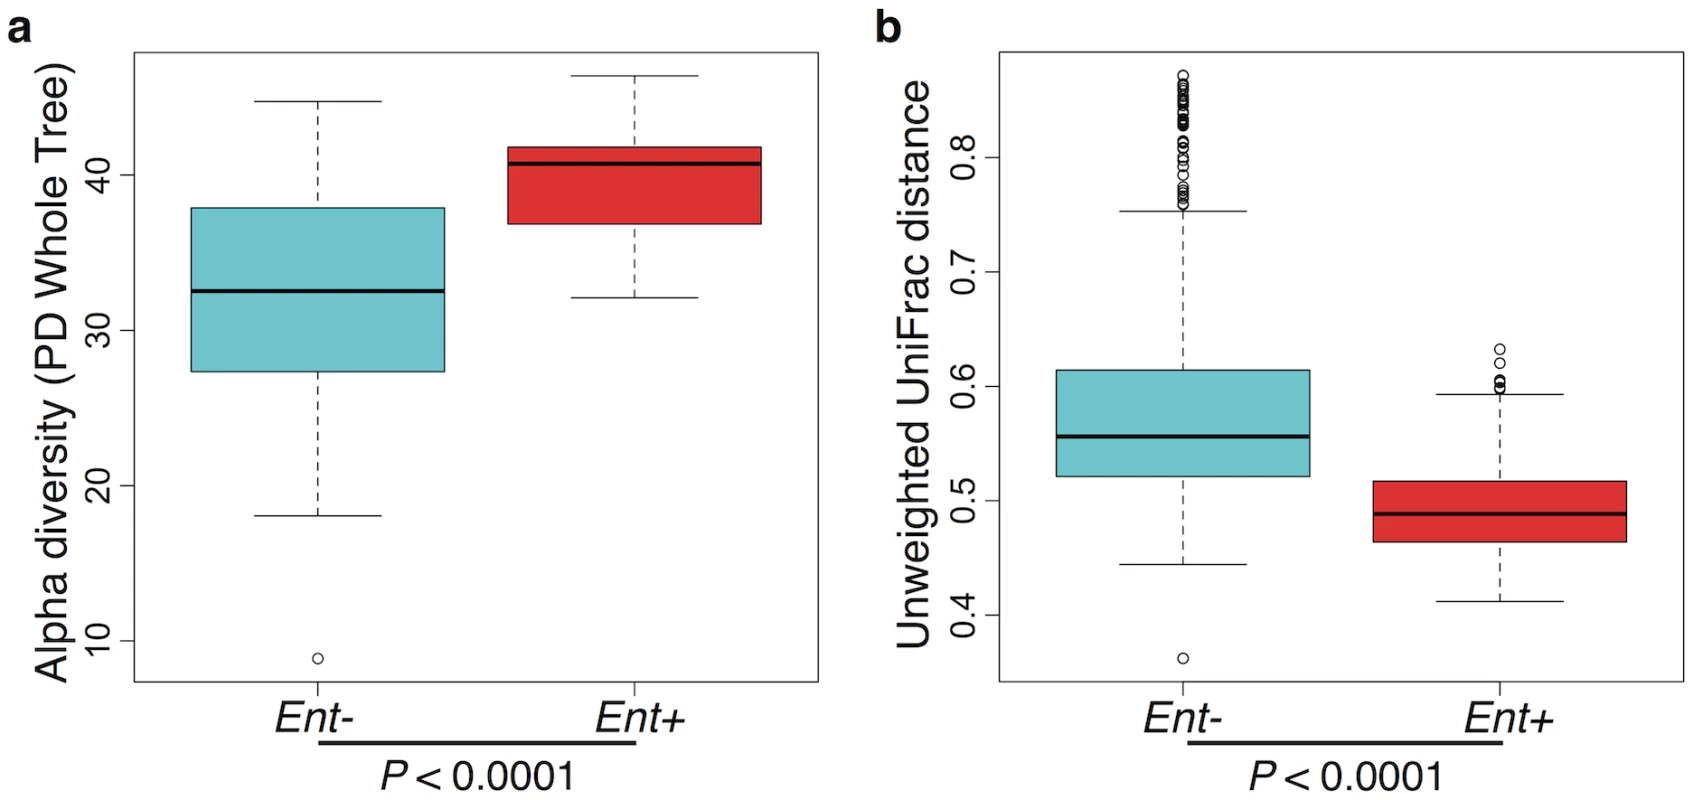 (a) Comparison of alpha diversity for <i>Entamoeba</i> negative (<i>Ent</i>-) and positive (<i>Ent</i>+) individuals using the phylogenetic distance whole tree metric.